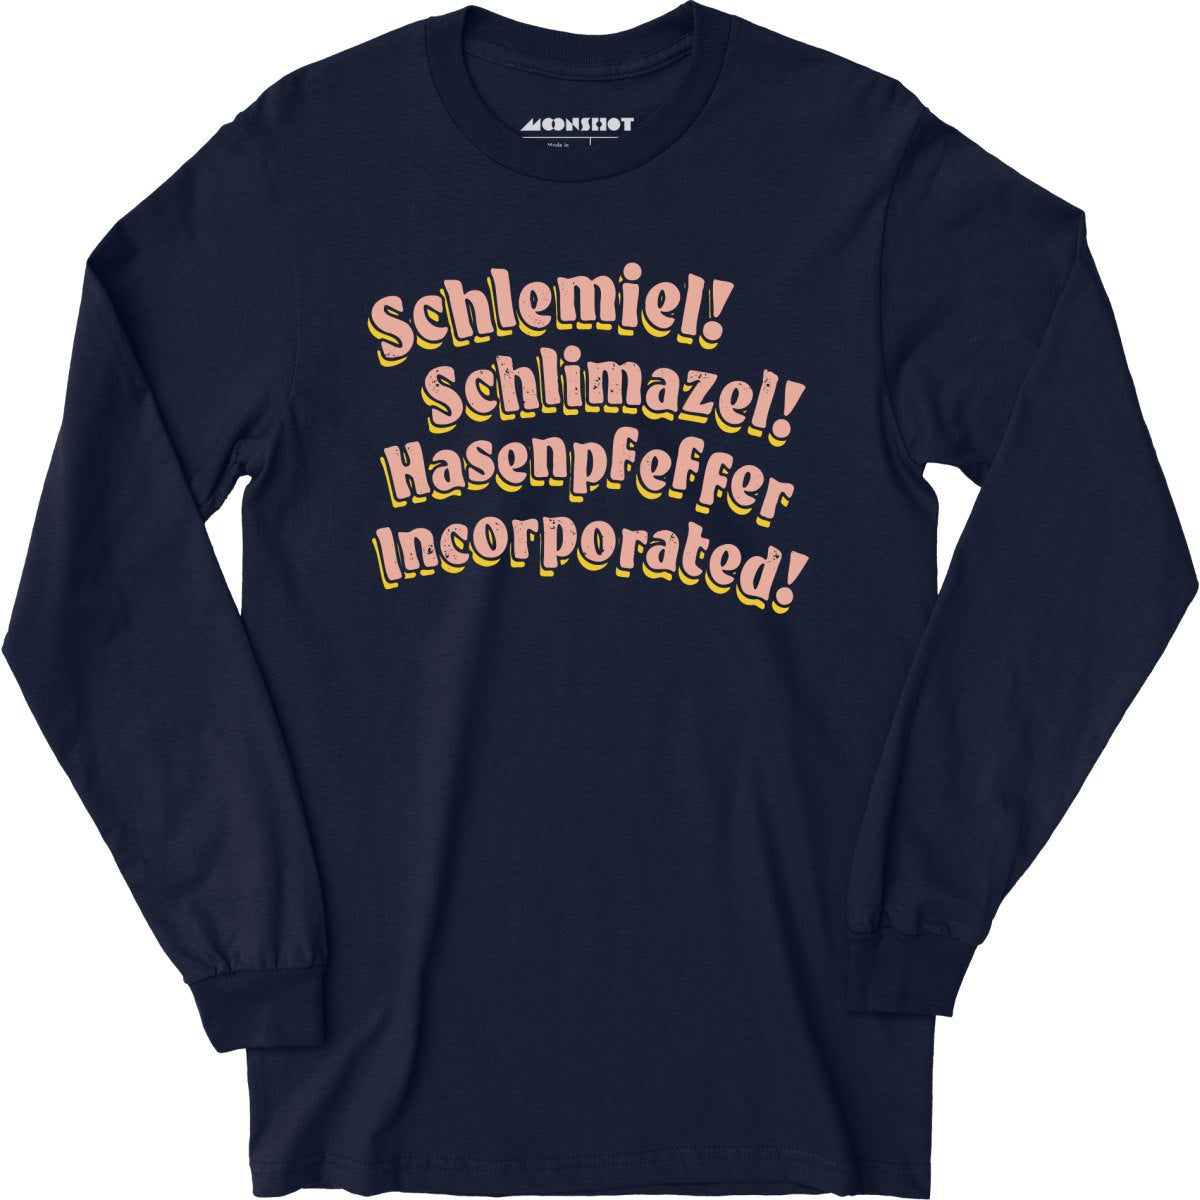 Schlemiel! Schlimazel! Hasenpfeffer Incorporated - Long Sleeve T-Shirt